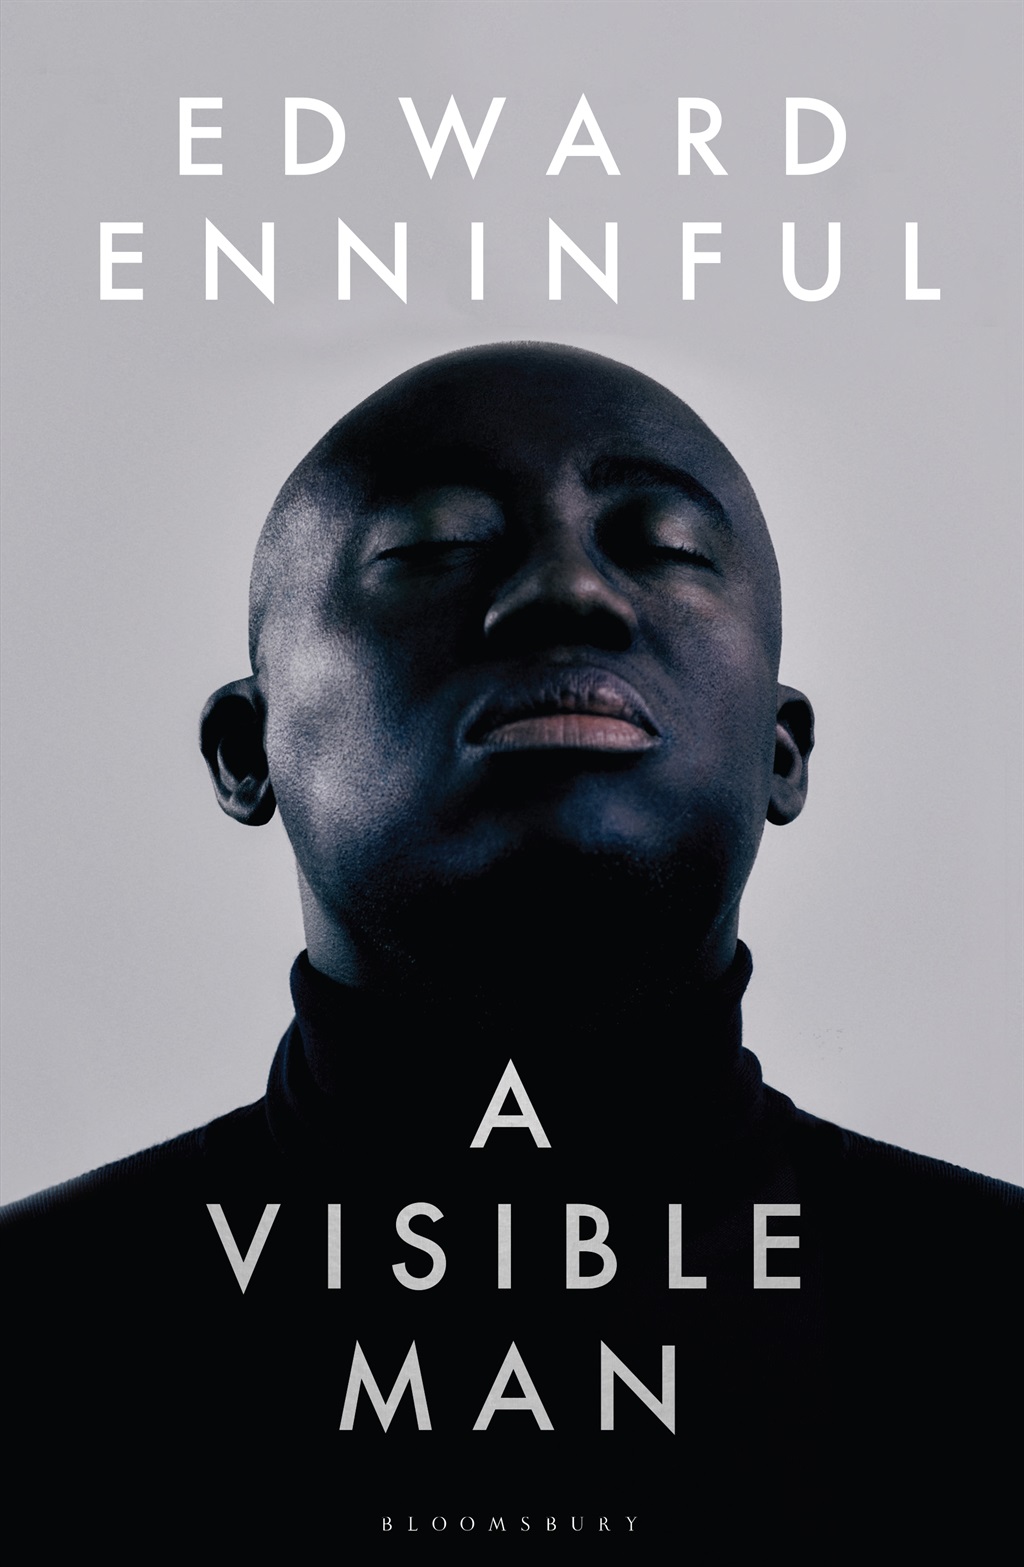 A Visible Man by Edward Enninful. (Bloomsbury)